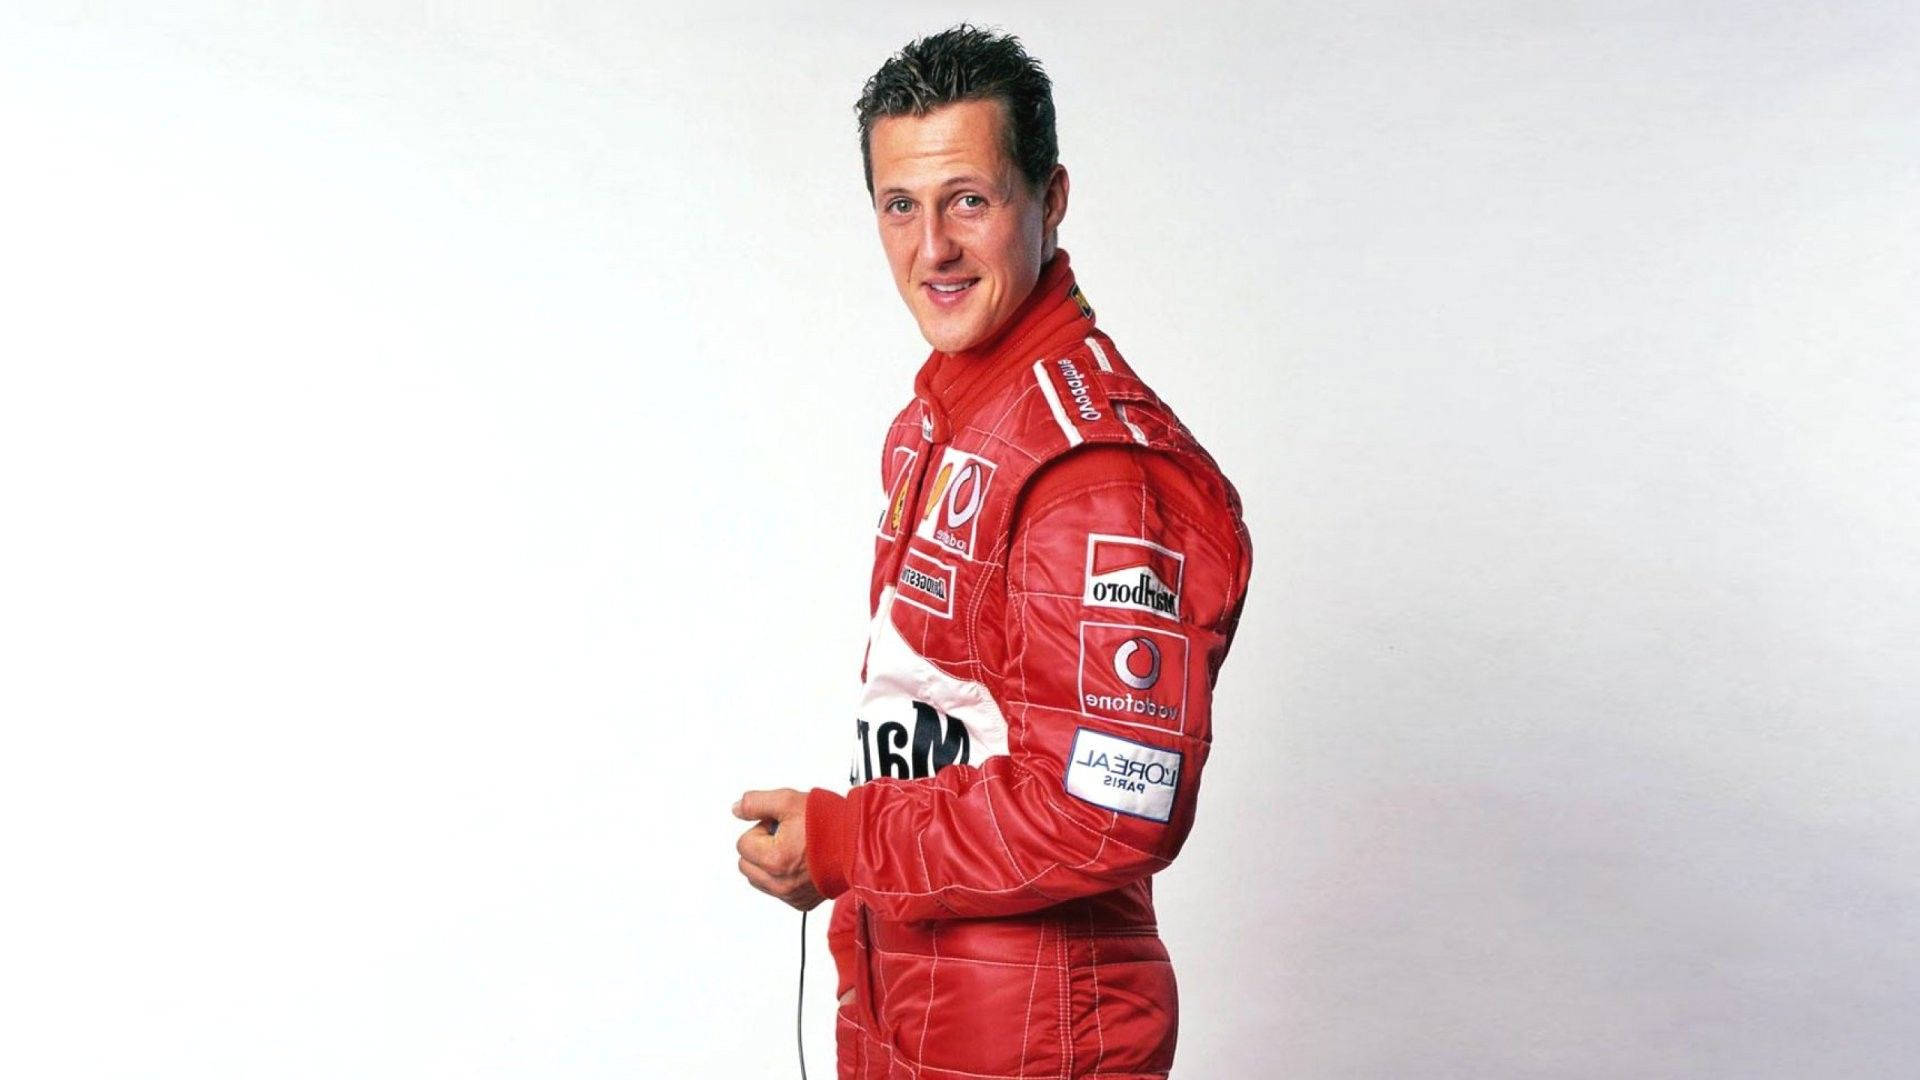 Solo Shot Michael Schumacher